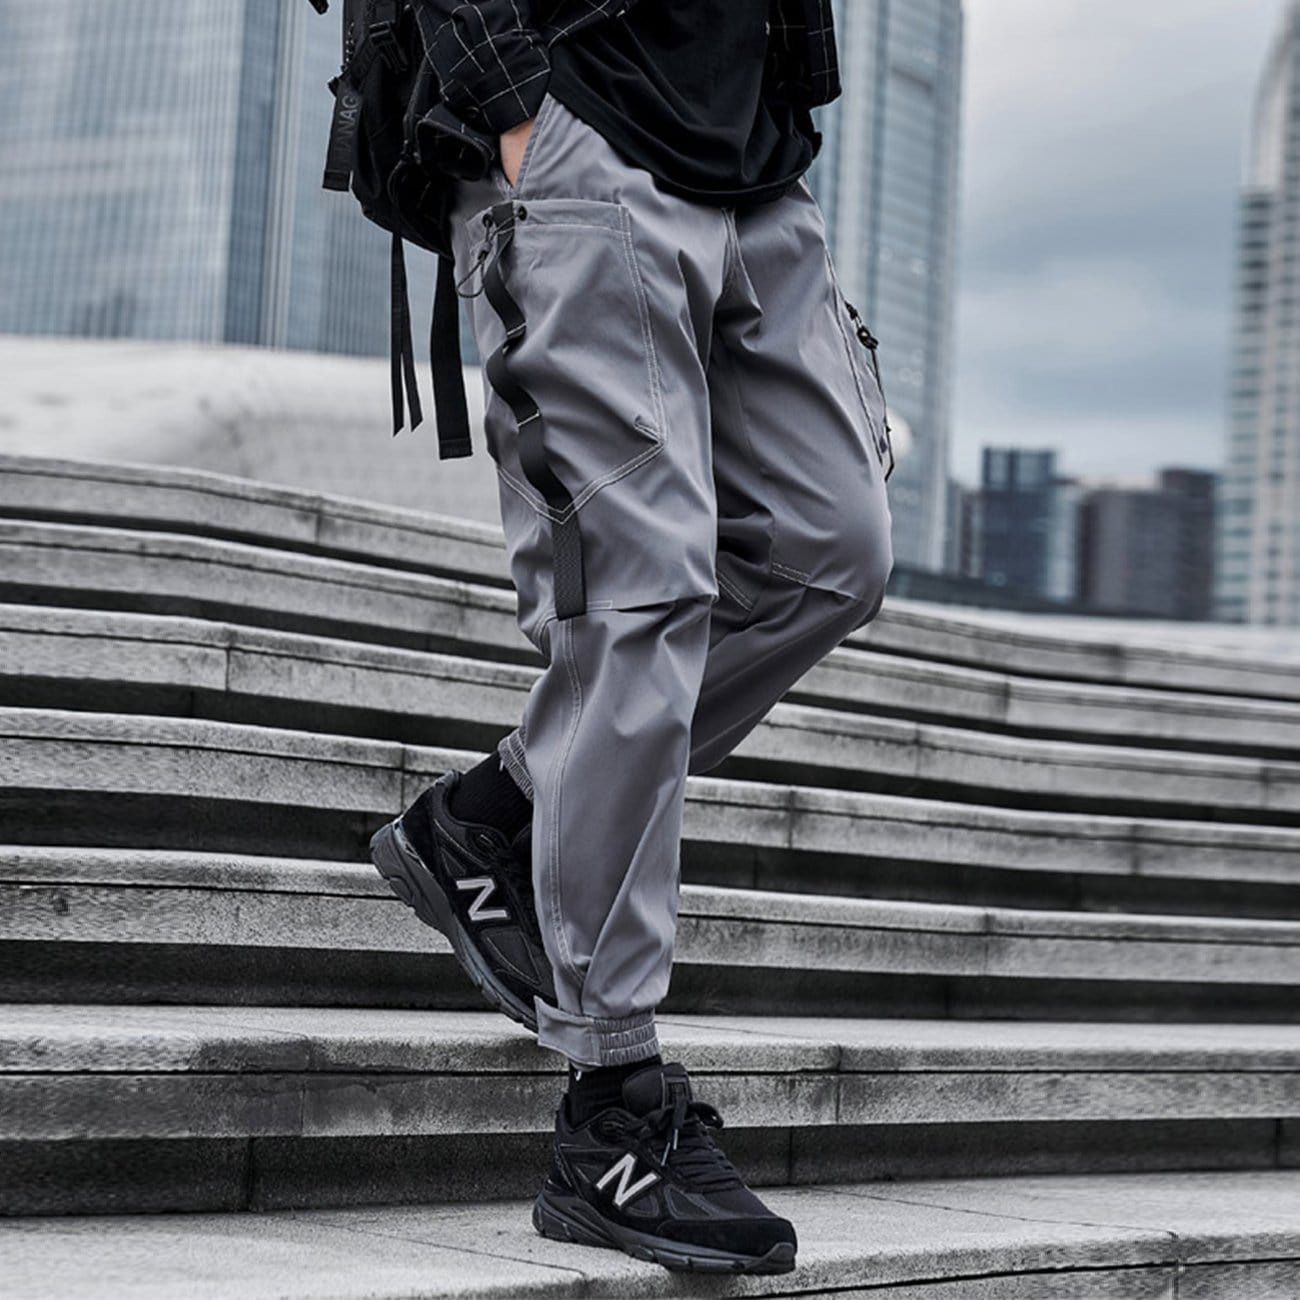 Function Bright Line Zipper Pockets Velcro Cargo Pants Streetwear Brand Techwear Combat Tactical YUGEN THEORY